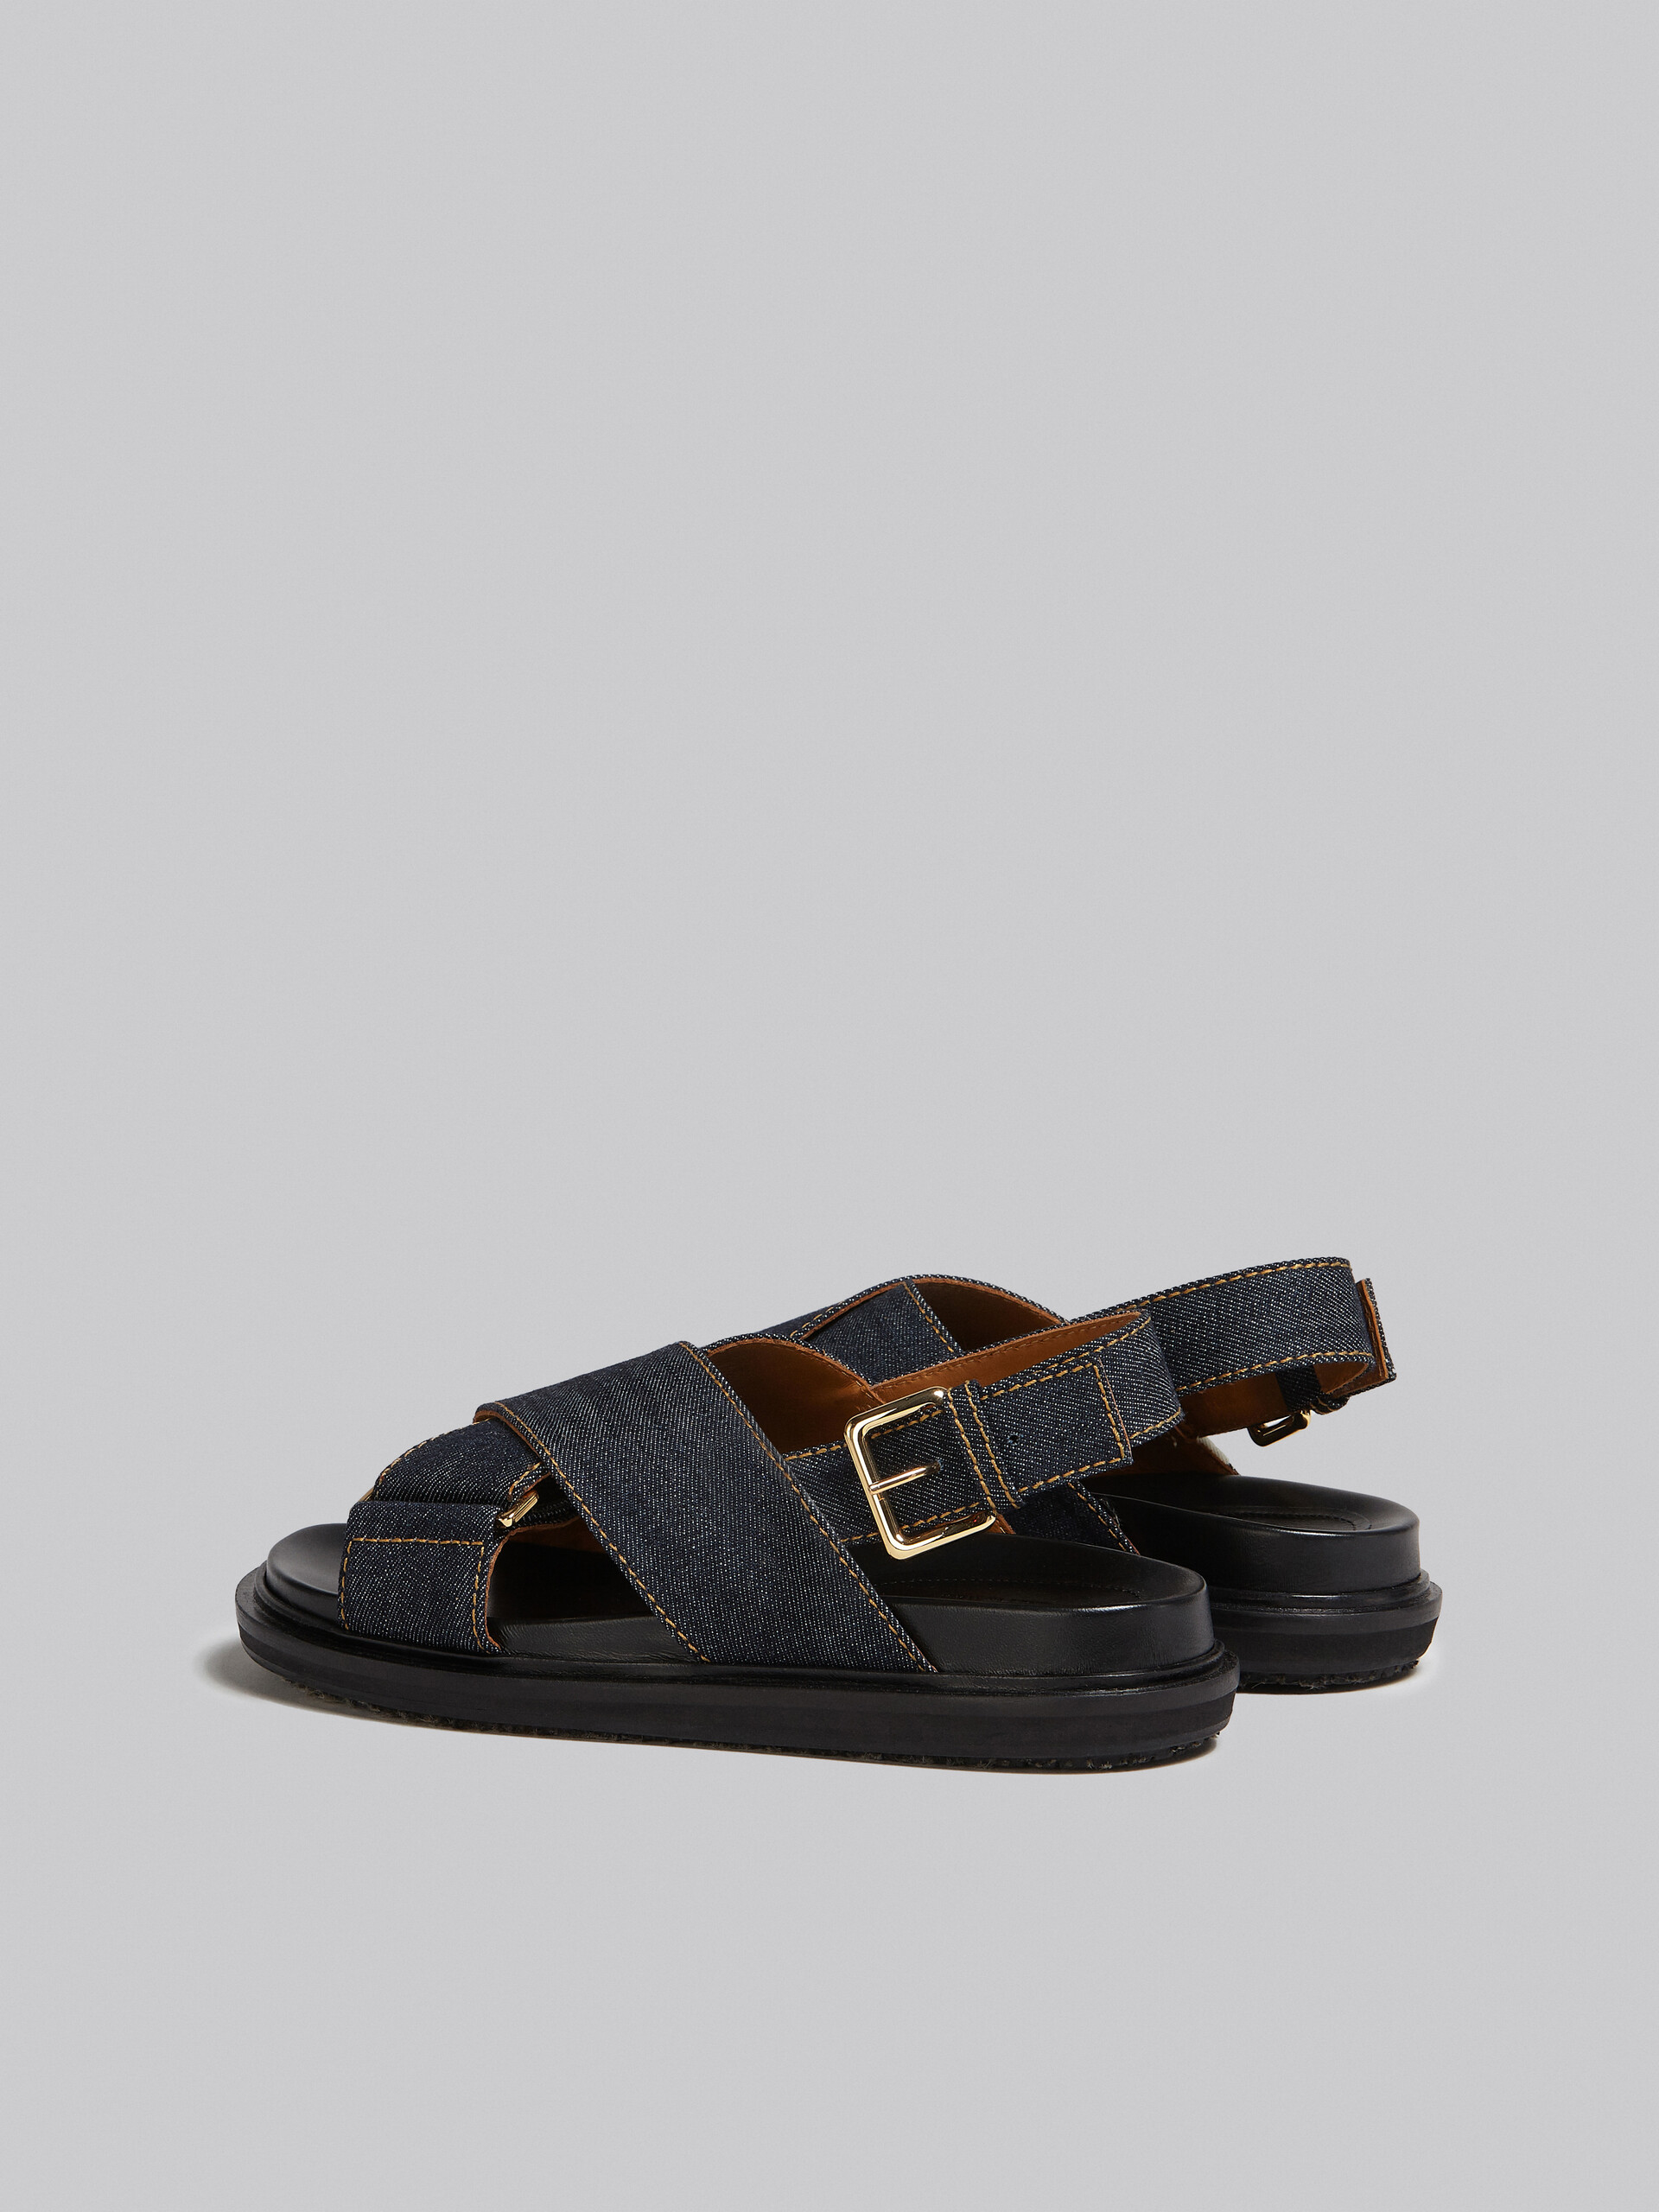 Blue denim criss-cross sandal - Sandals - Image 3